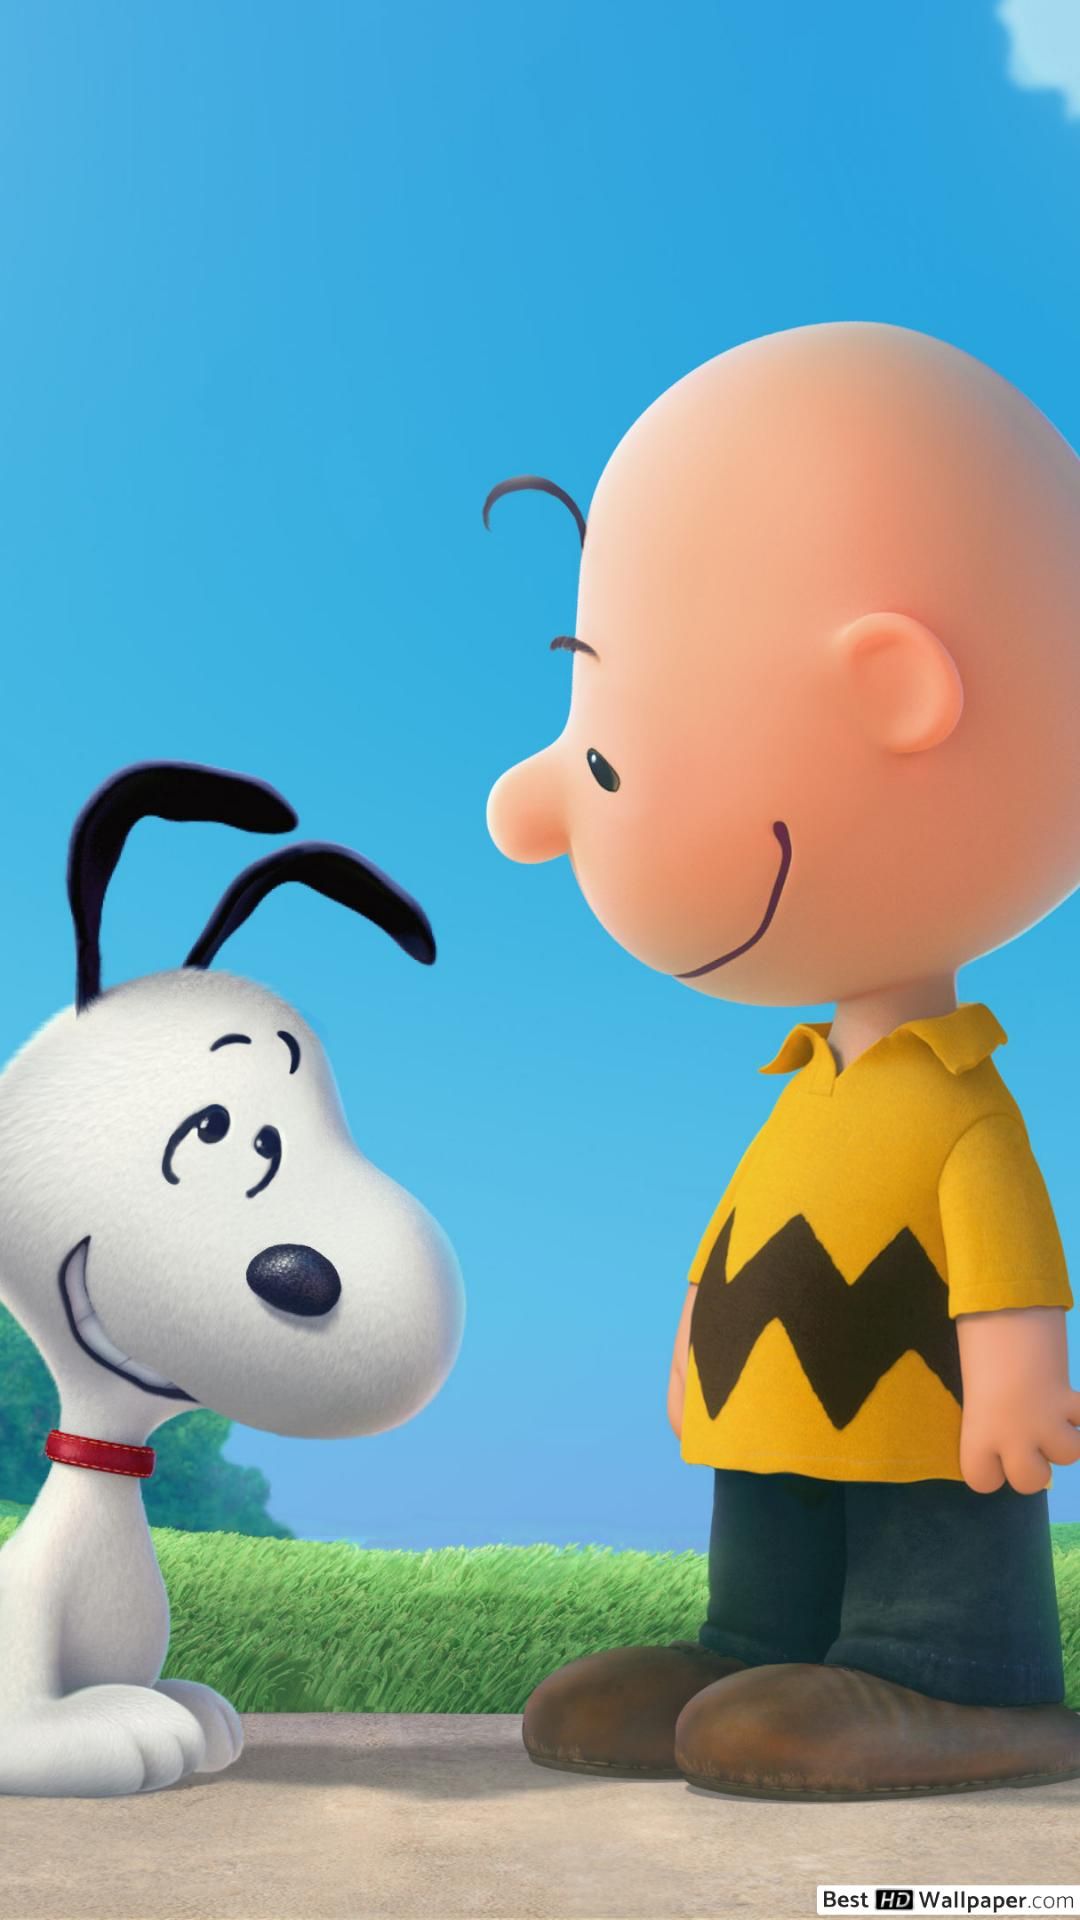 The Peanuts HD wallpaper download